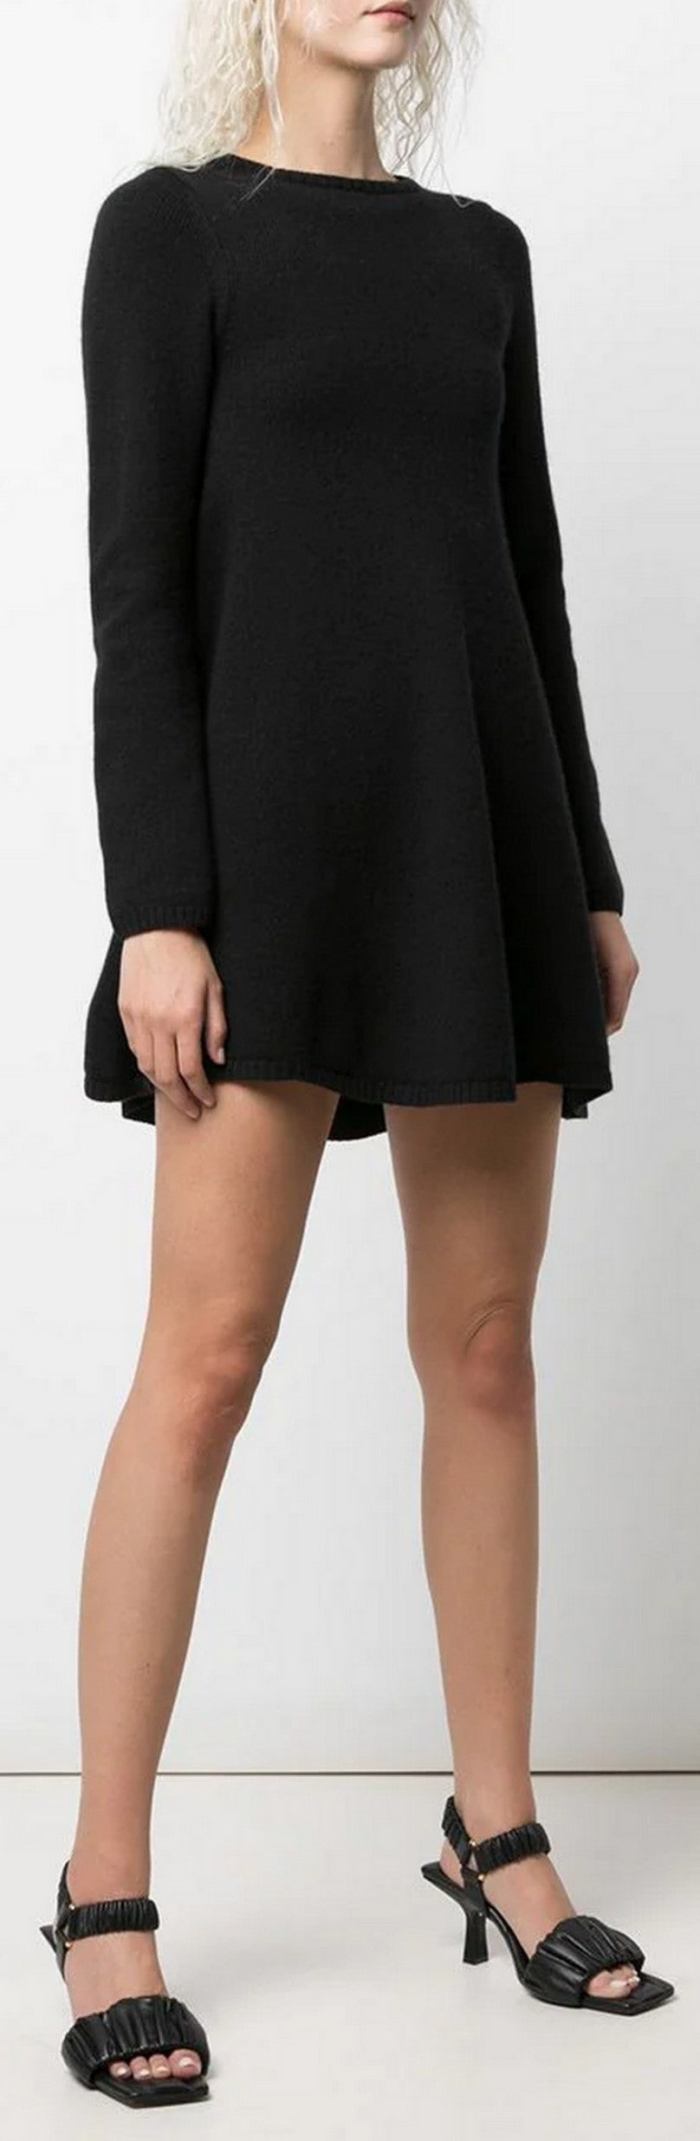 The Fleurine Cashmere Mini Dress, Black Inspired Fashions Boutique